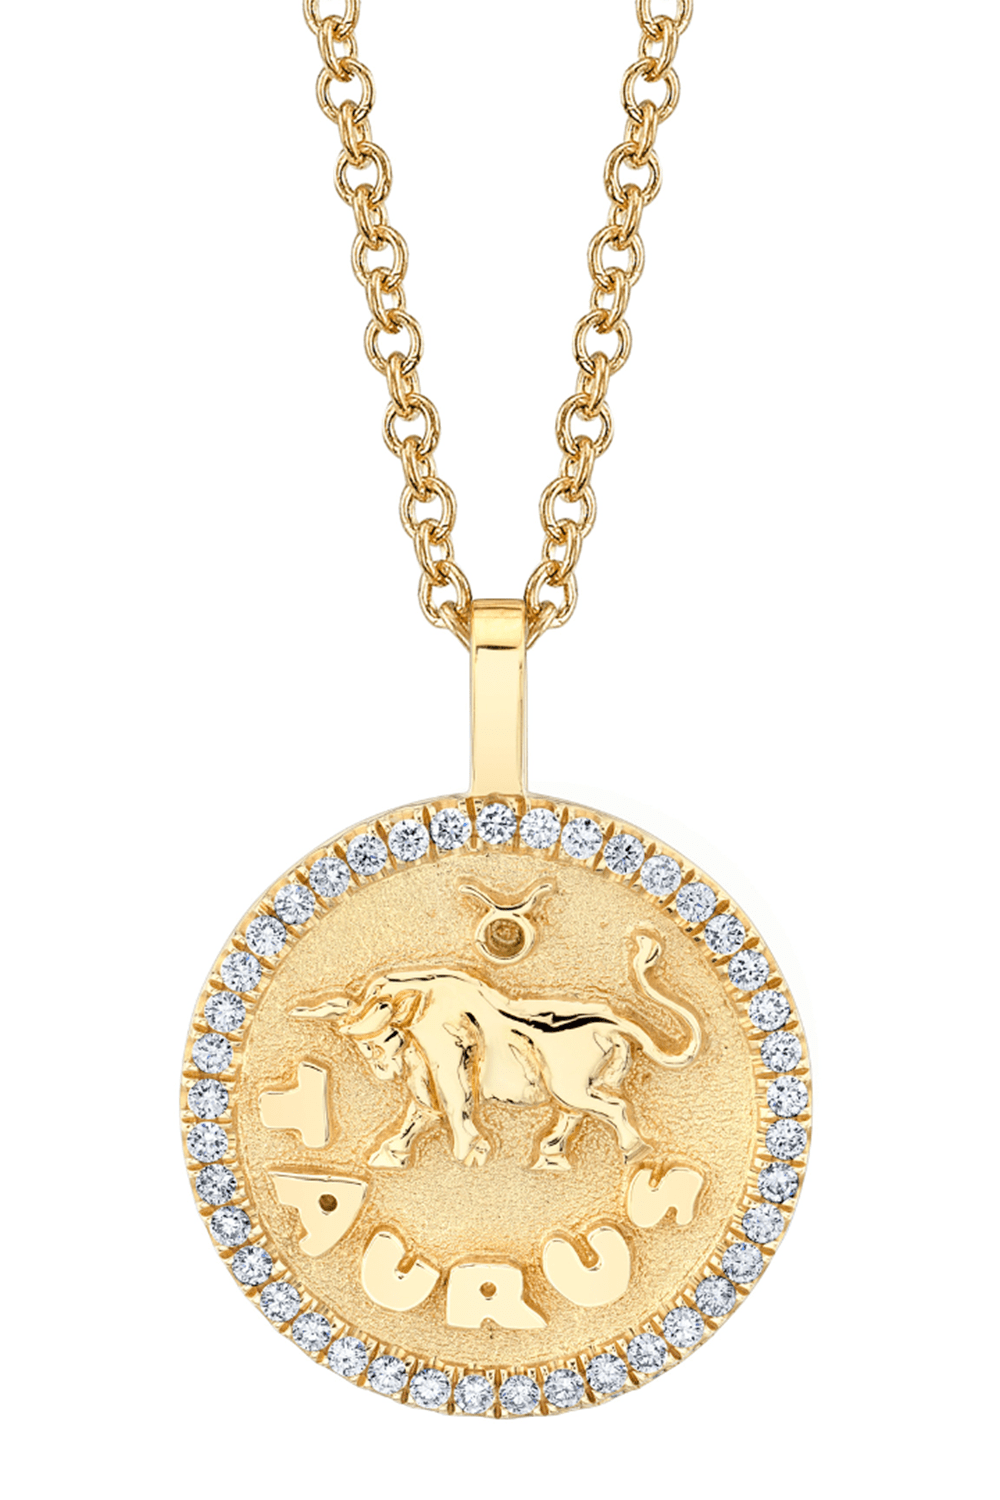 ANITA KO-Taurus Zodiac Coin Pendant Necklace-YELLOW GOLD